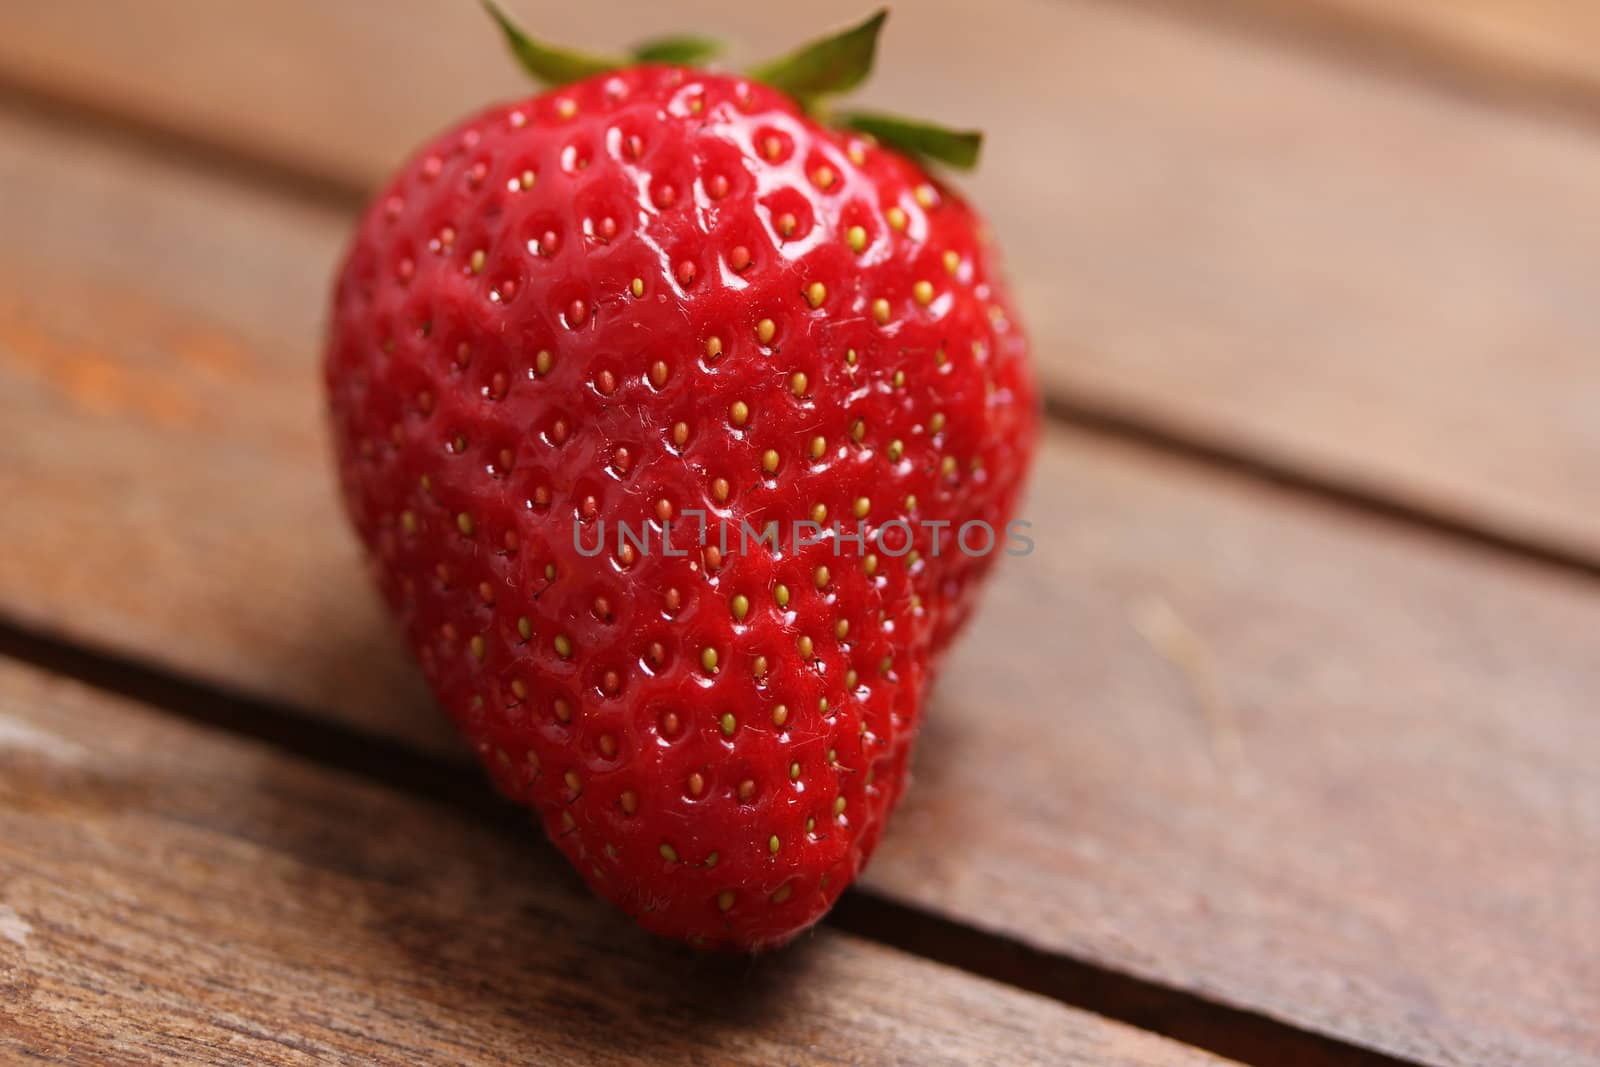 a fresh strawberry by Teka77